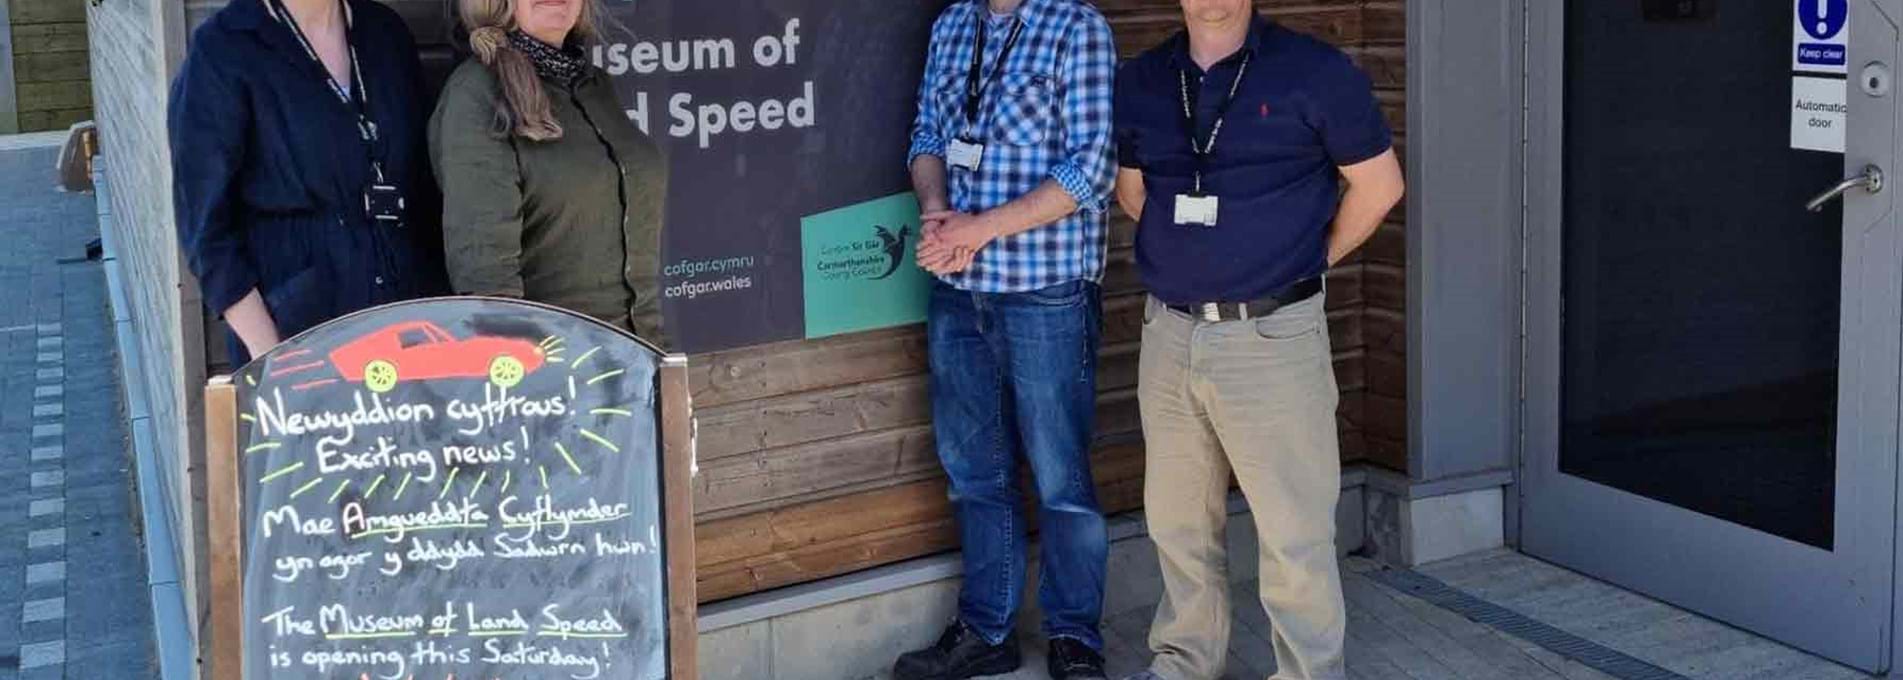 Museum of Land Speed Opening image